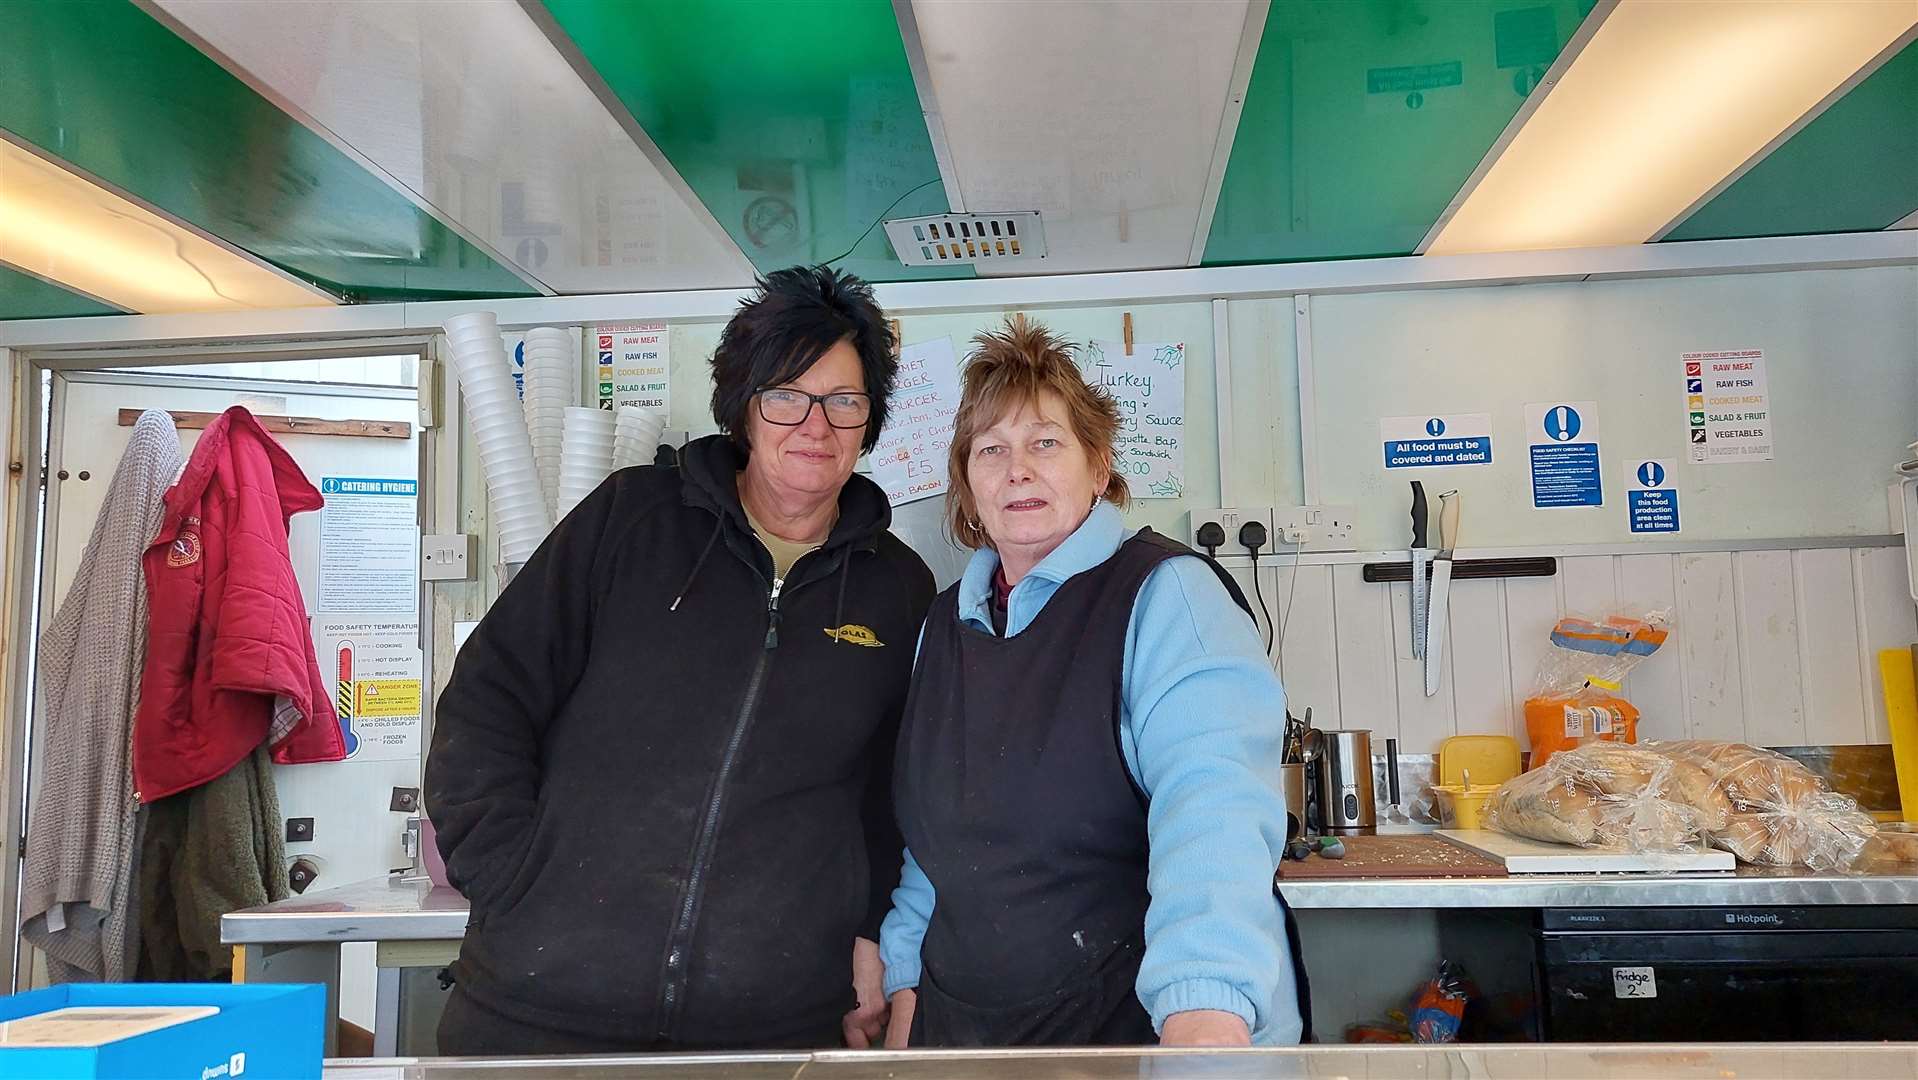 Tracey Crockford and Joanne Weston run TJ's burger van